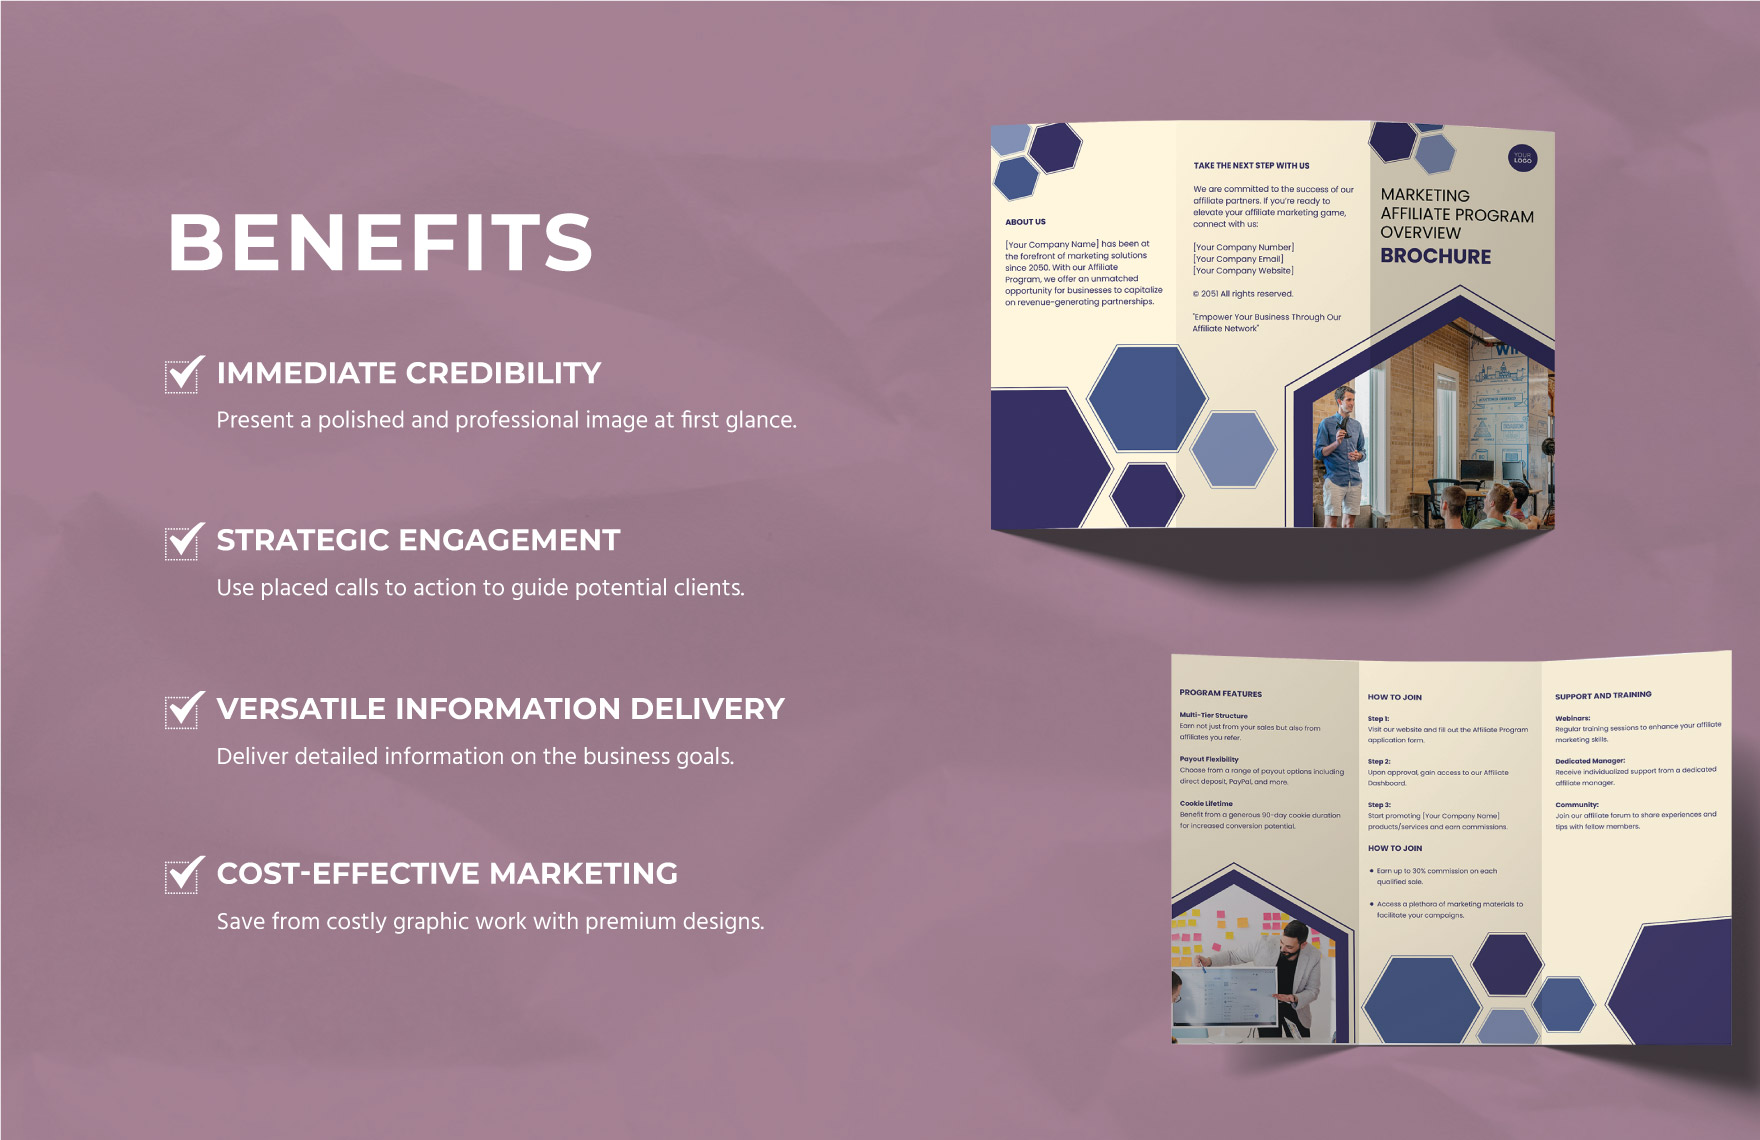 Marketing Affiliate Program Overview Brochure Template